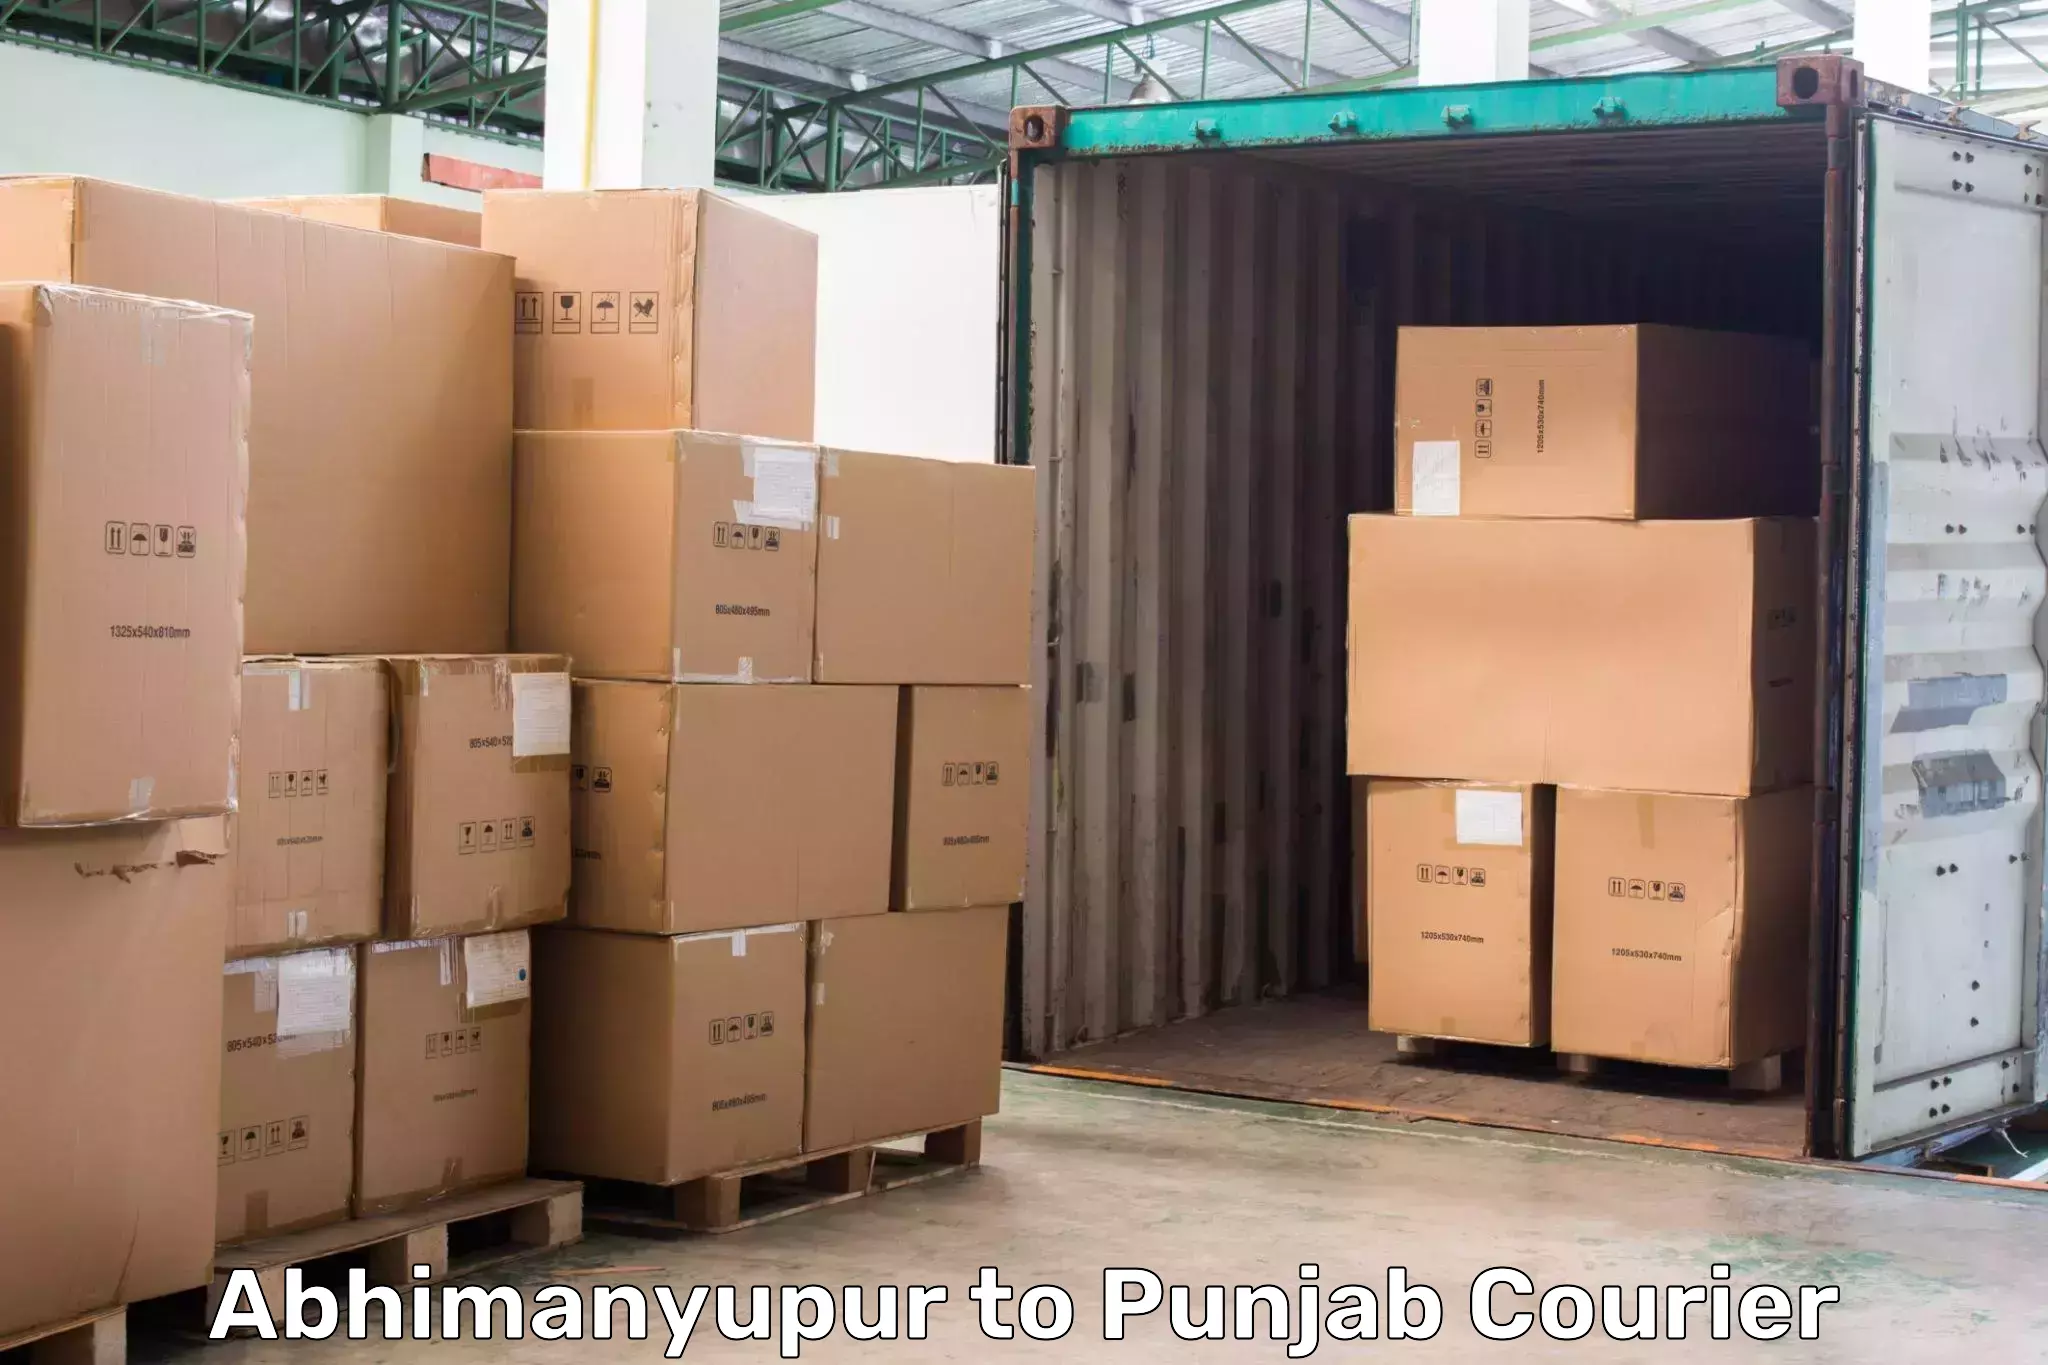 Courier app Abhimanyupur to Punjab